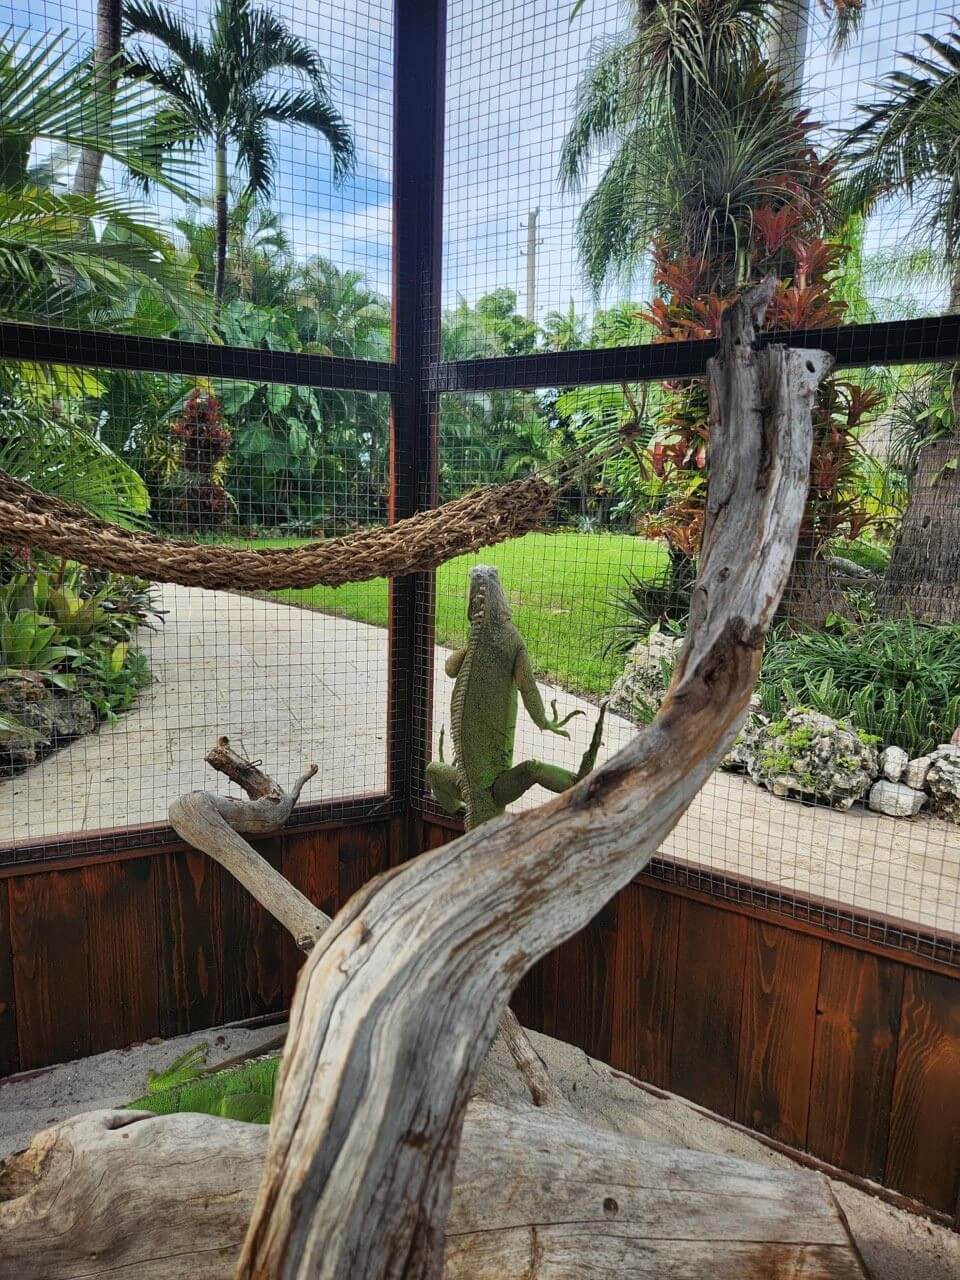 2022 10 12 SV 1801 Iguanas quarantine enclosure at Iguana Haven 2 PETA Rescues 65 Animals From Tri-State Zoological Park